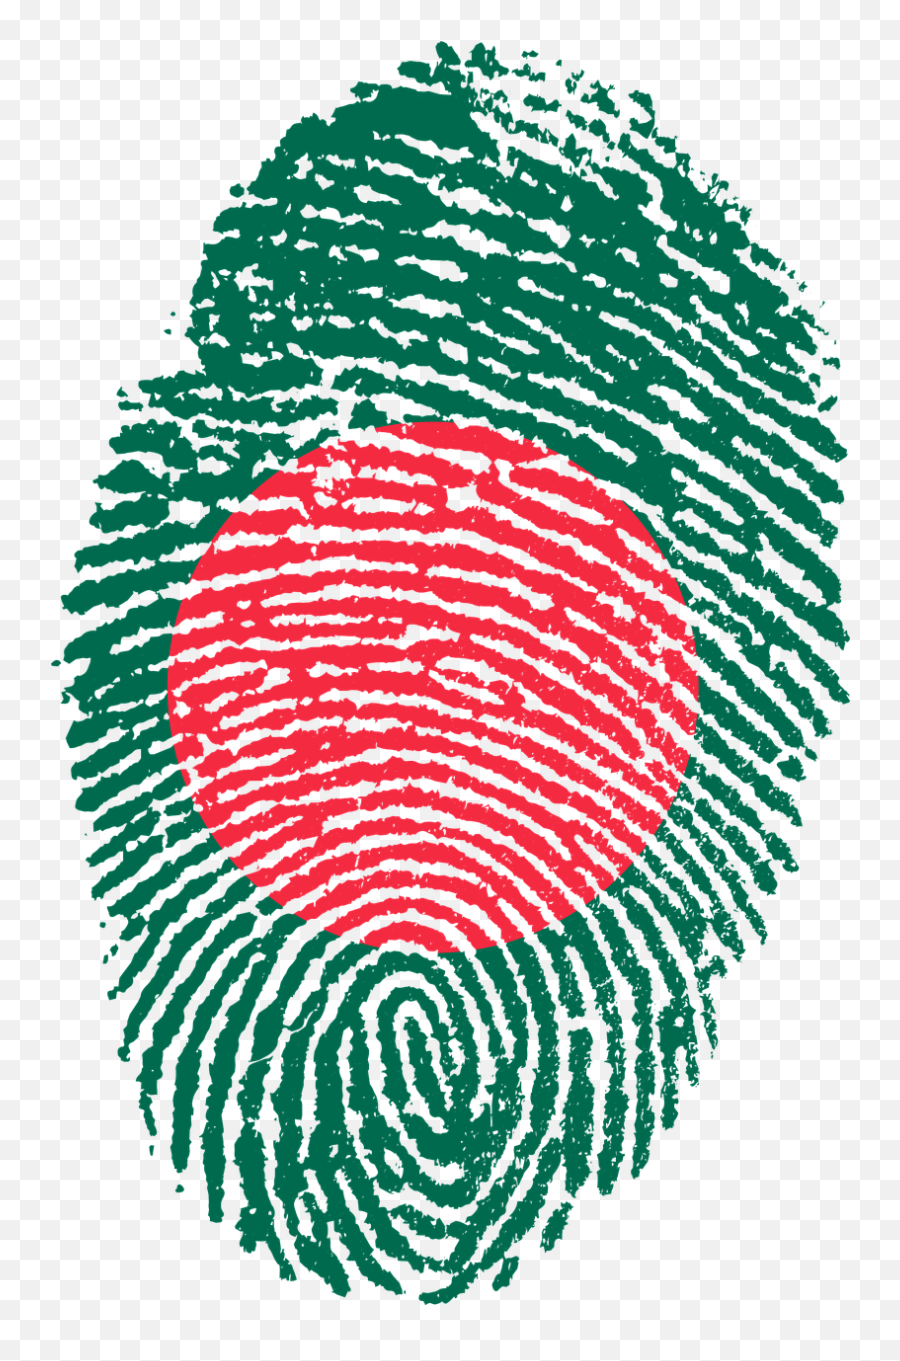 Bangladesh Flag Fingerprint - Bangladesh Flag Fingerprint Png,Fingerprint Png